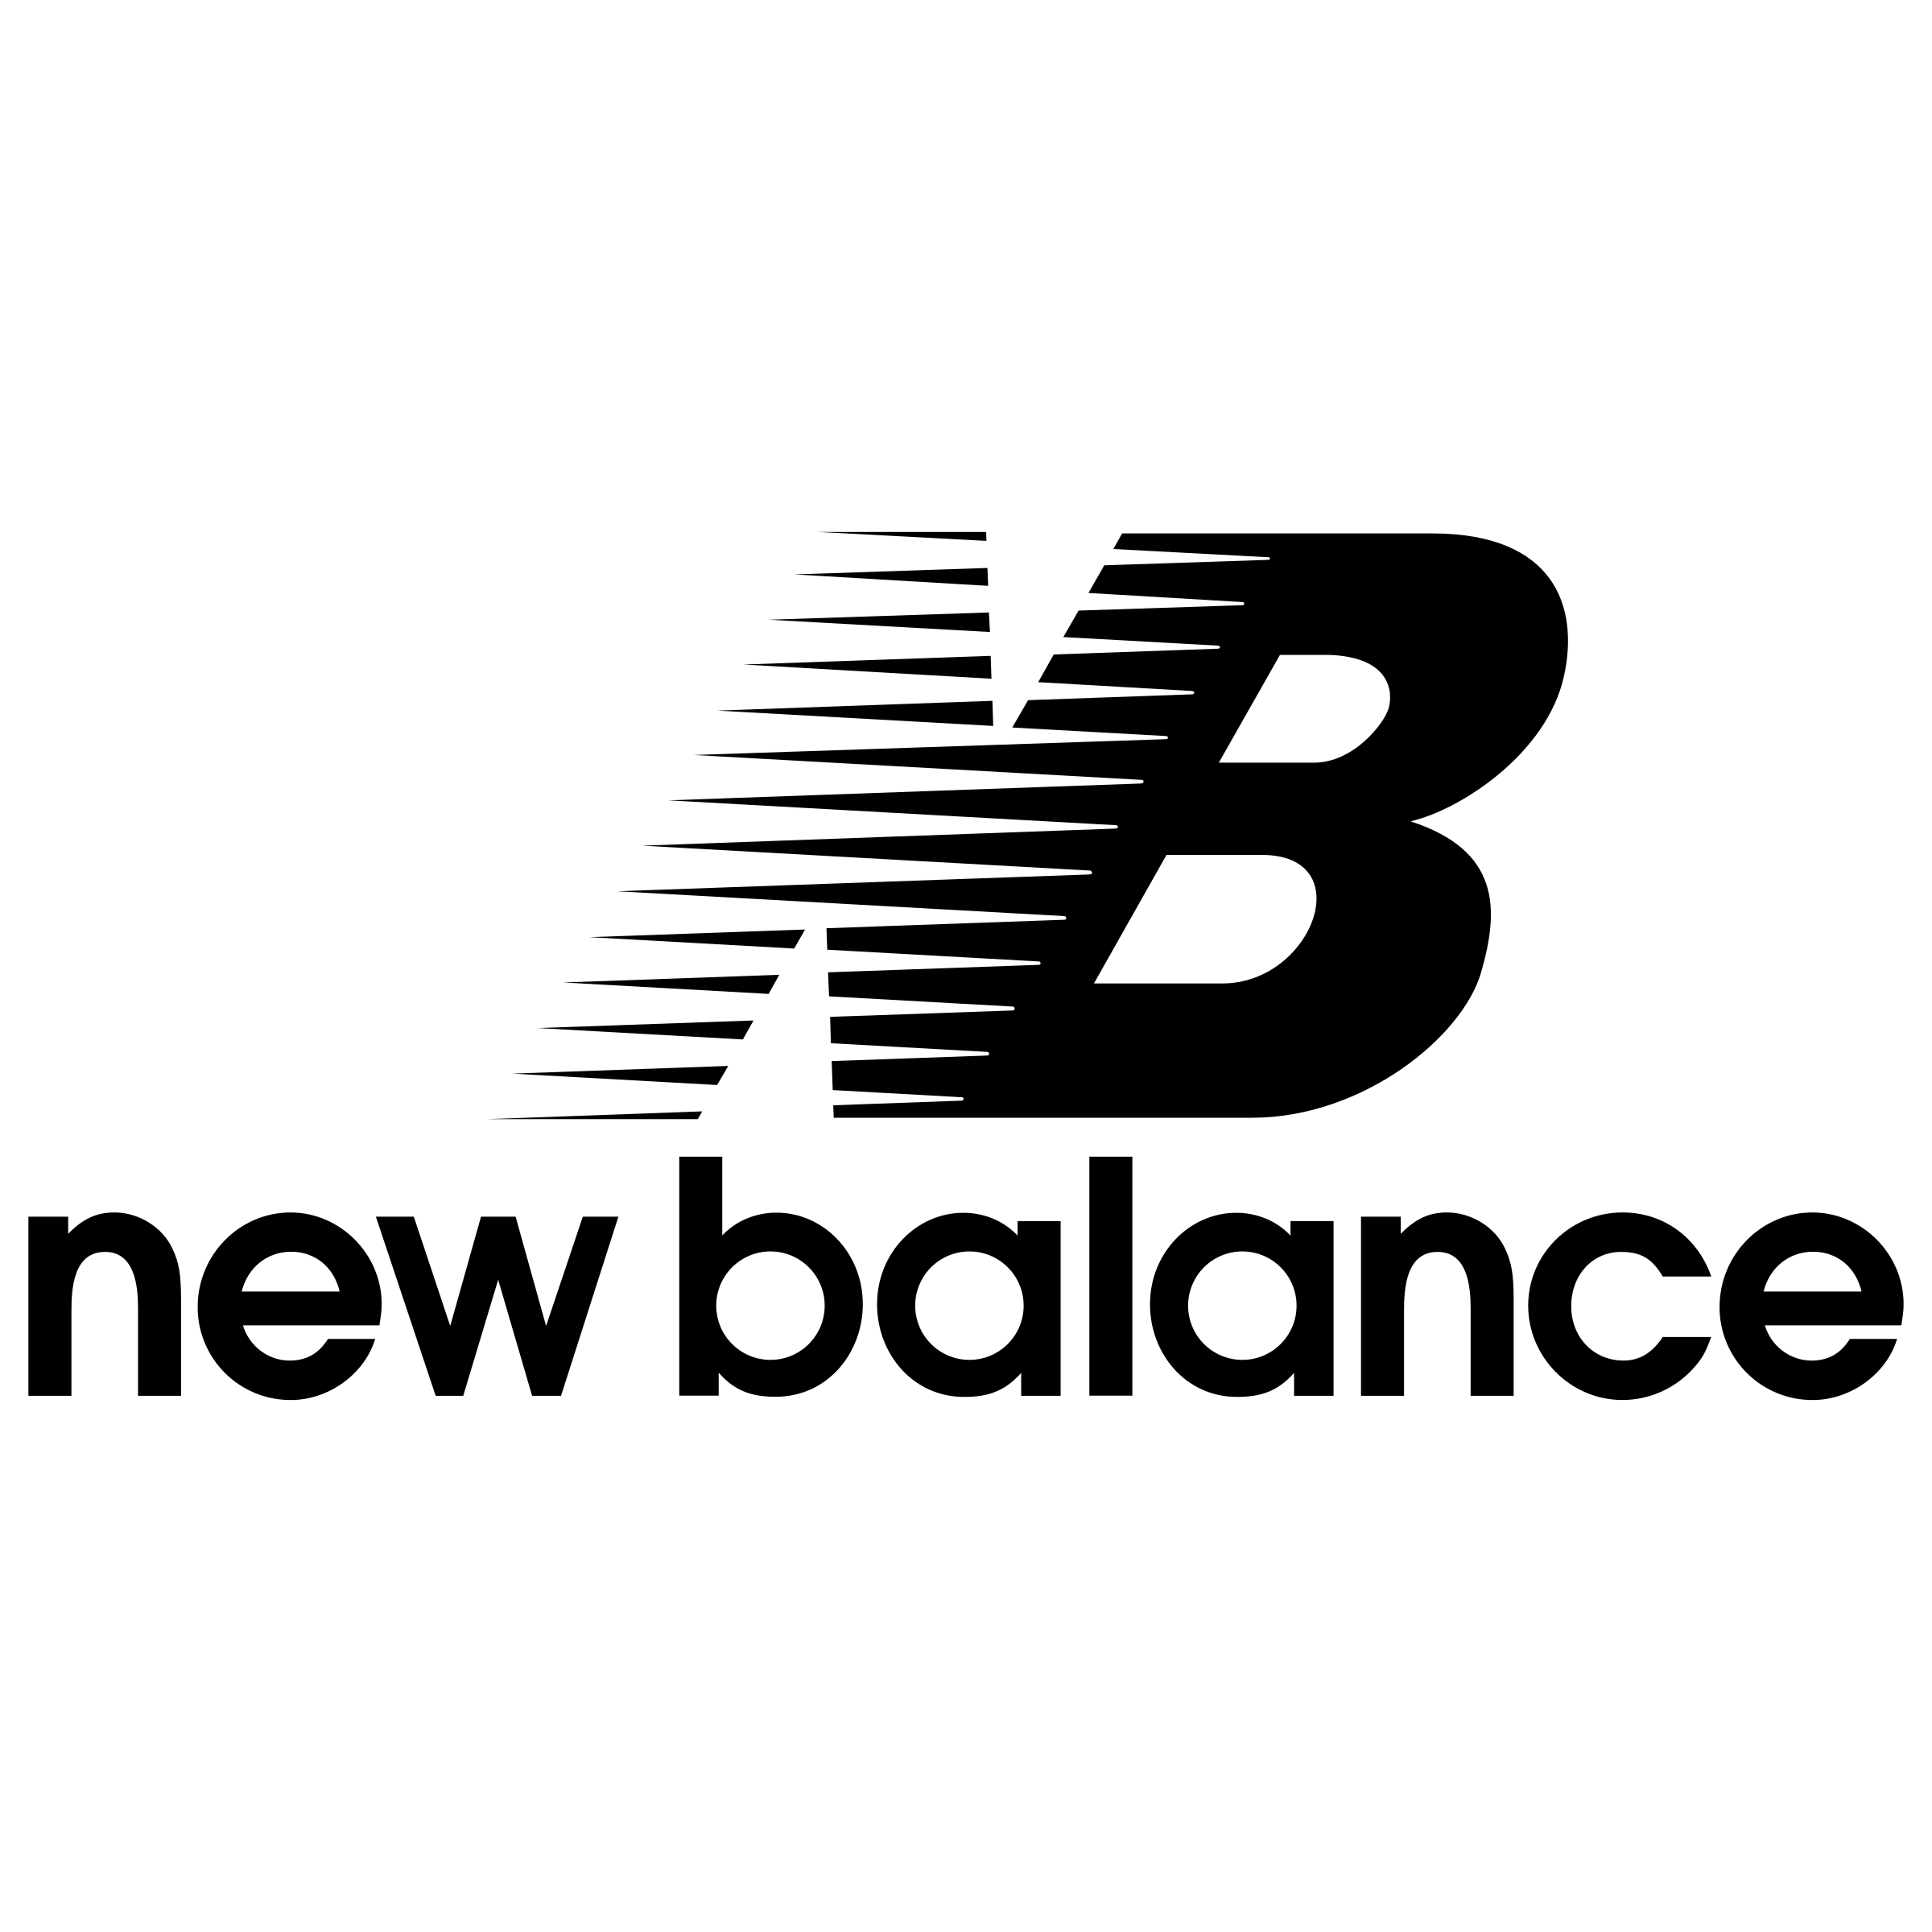 New Balance Logo - New Balance Logo PNG Transparent & SVG Vector - Freebie Supply